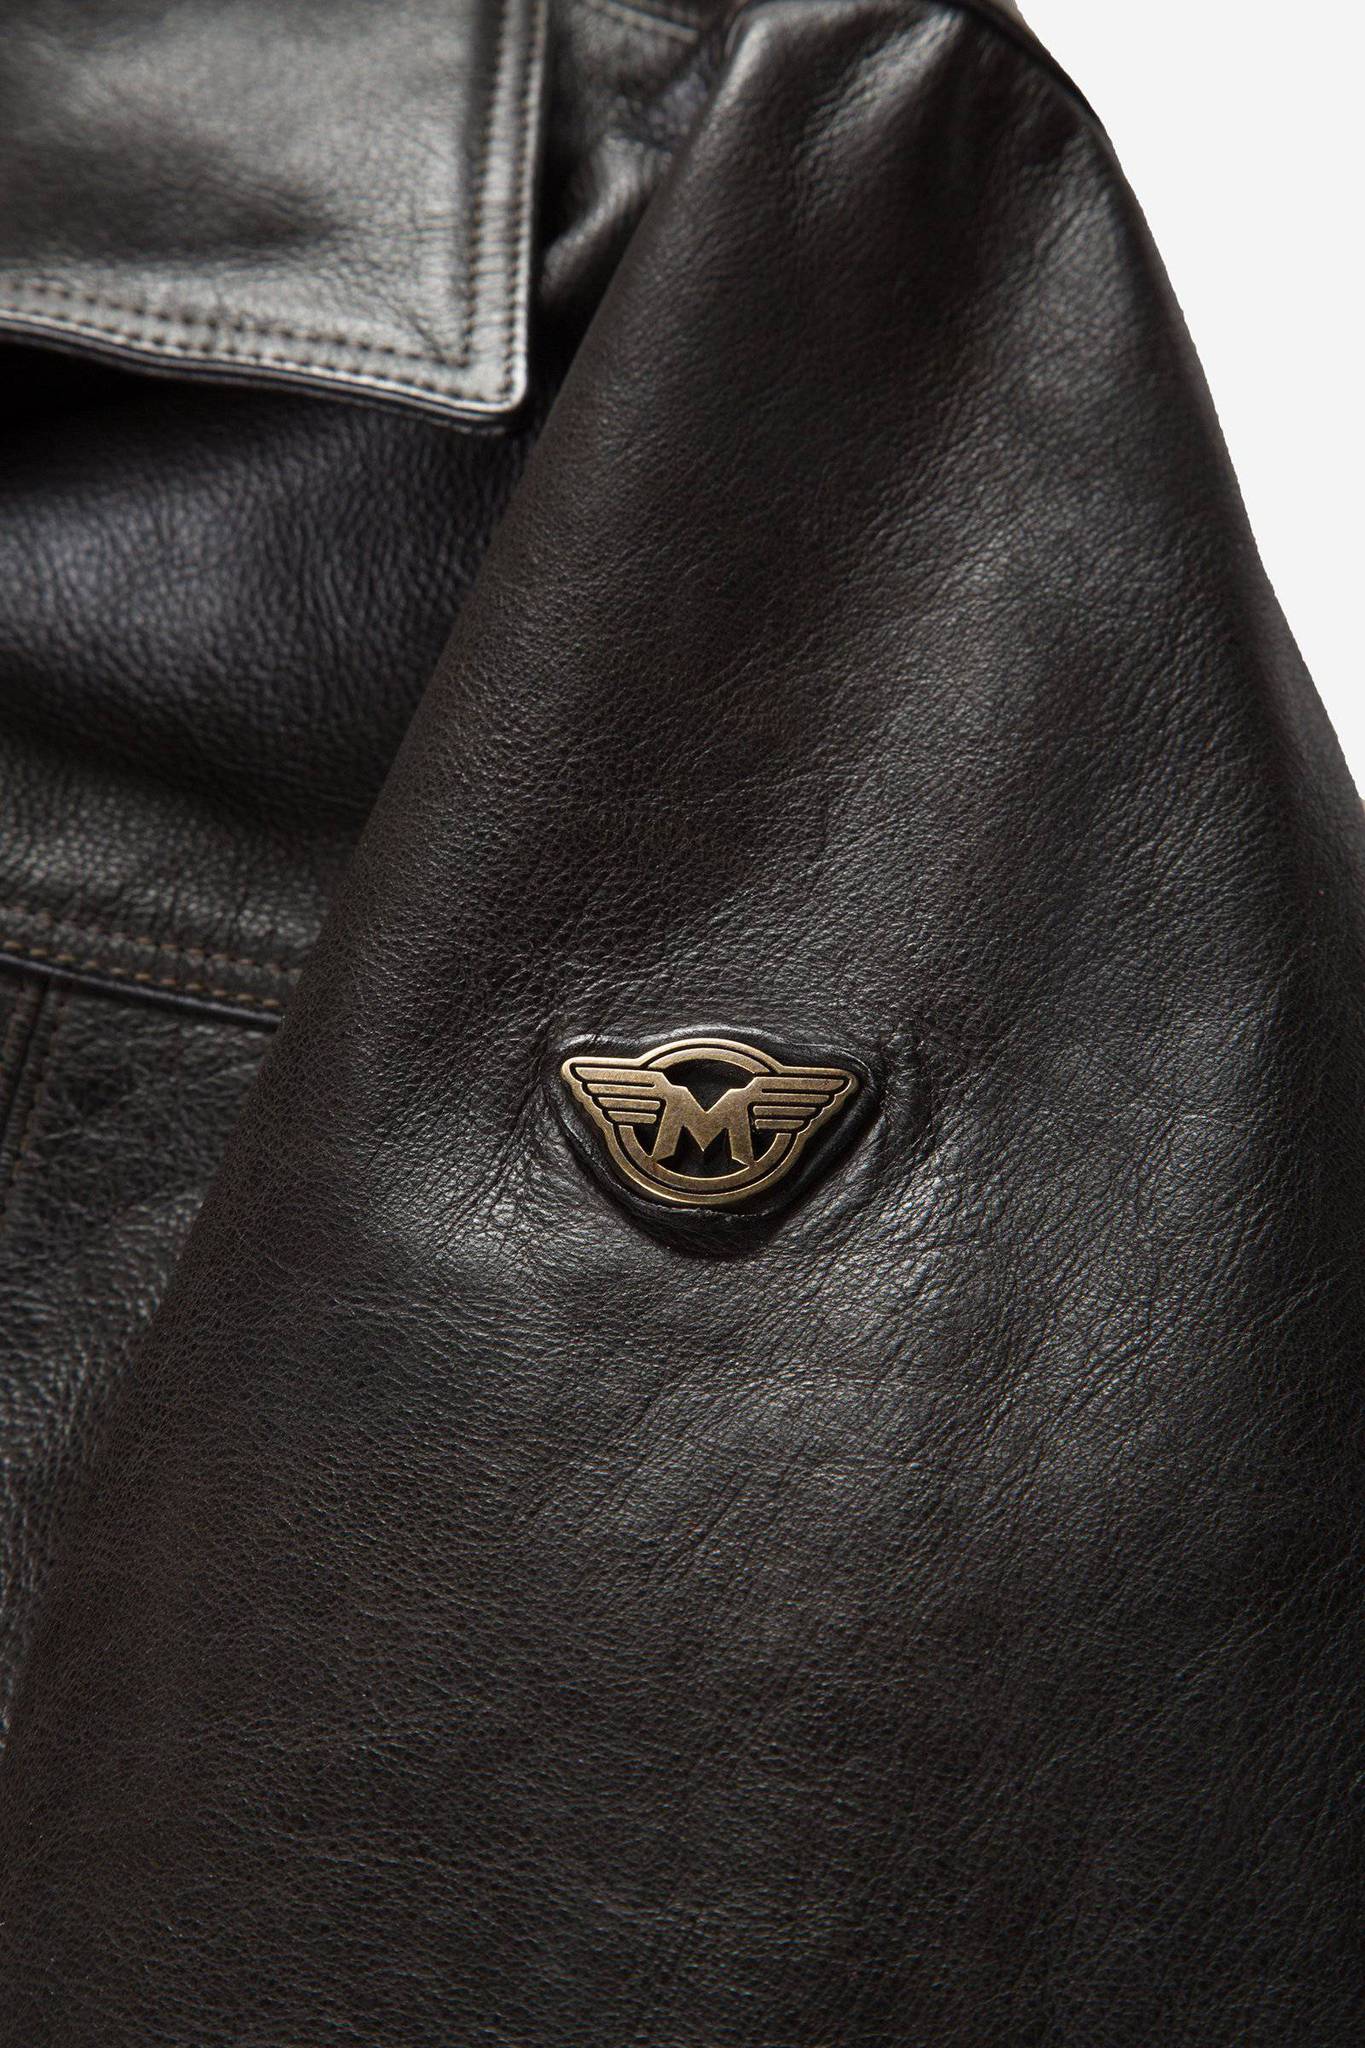 Matchless Tyler Men's Leather Jacket Antique Black - New W21 